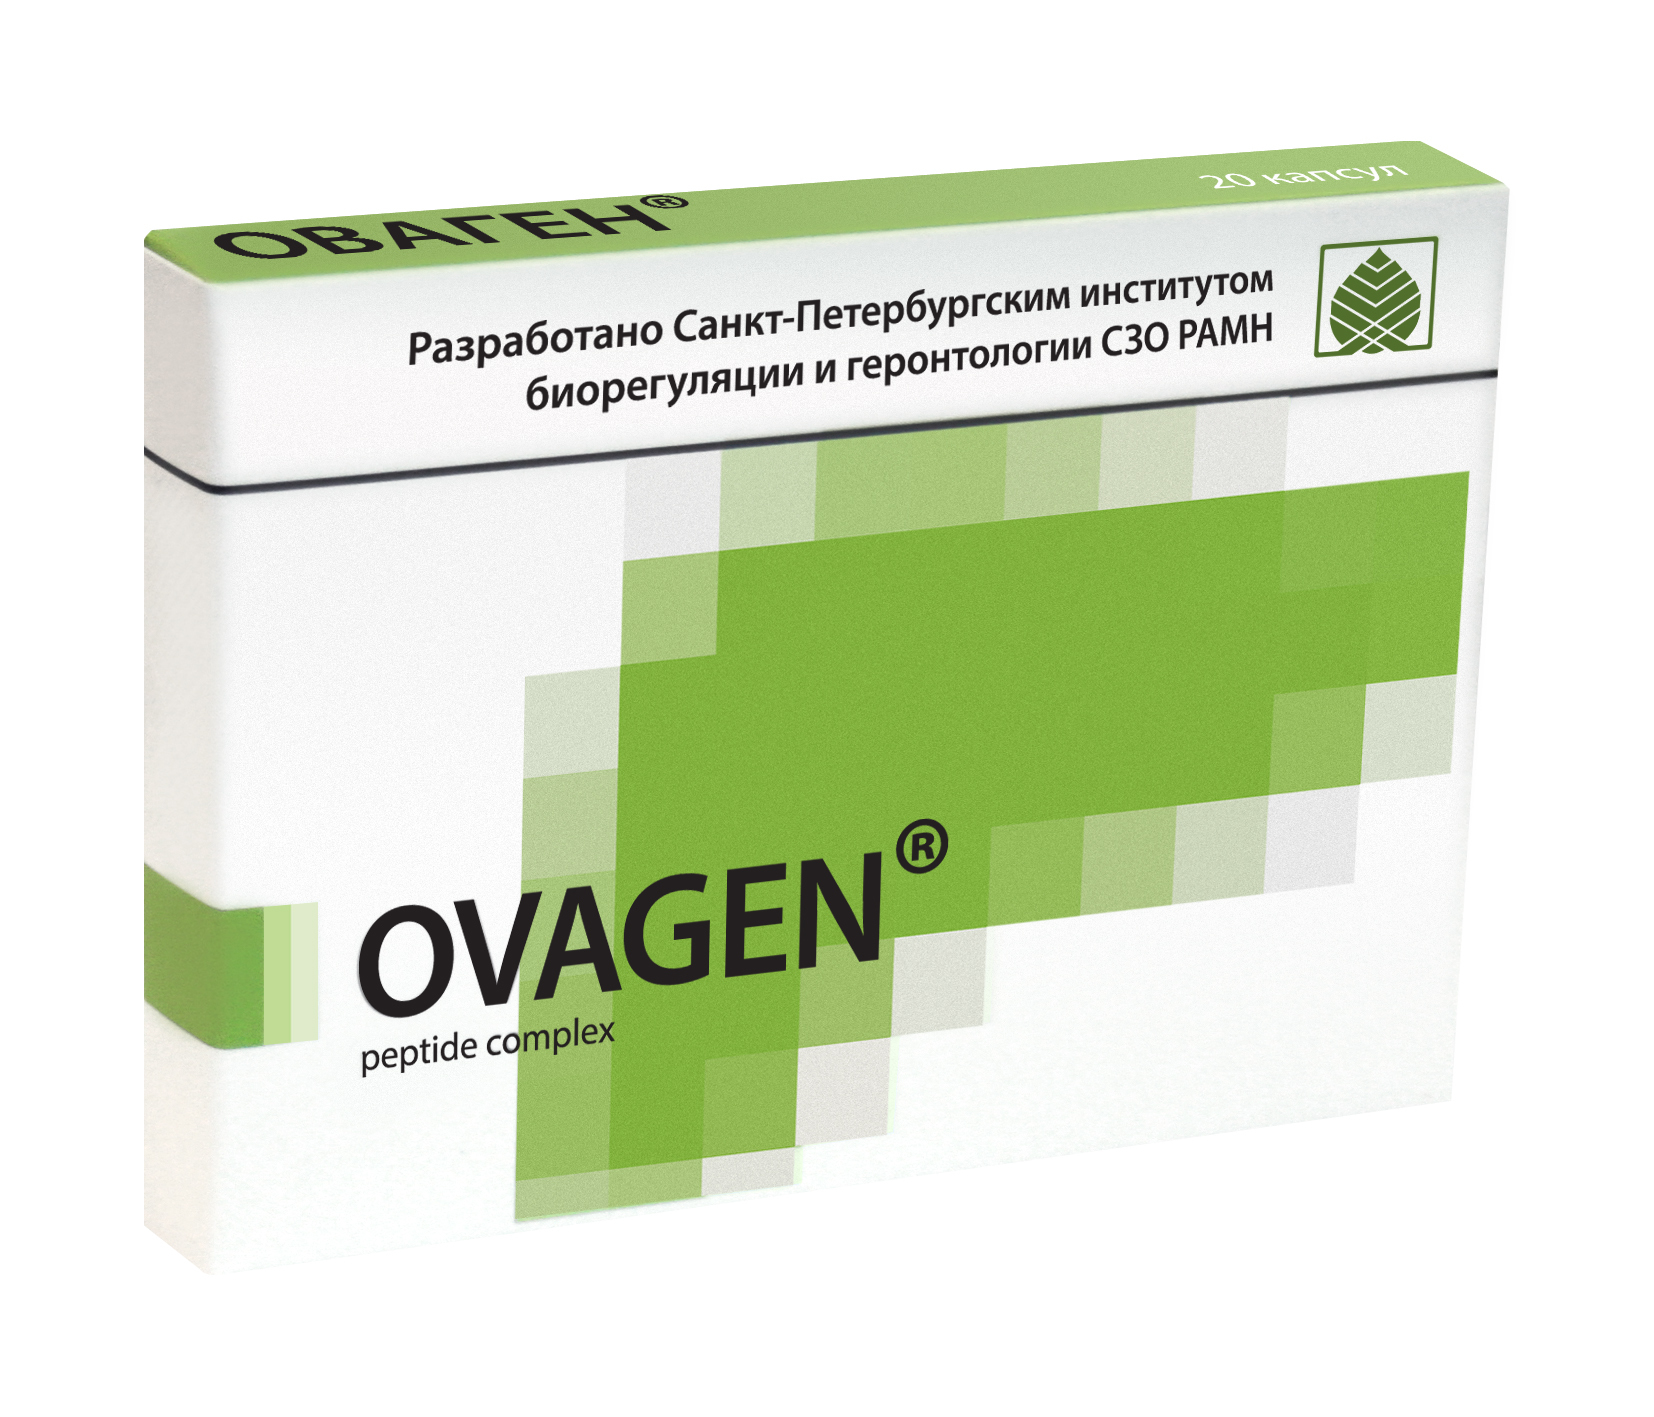 Liver and Gastrointestinal Tract Bioregulator (Ovagen®)